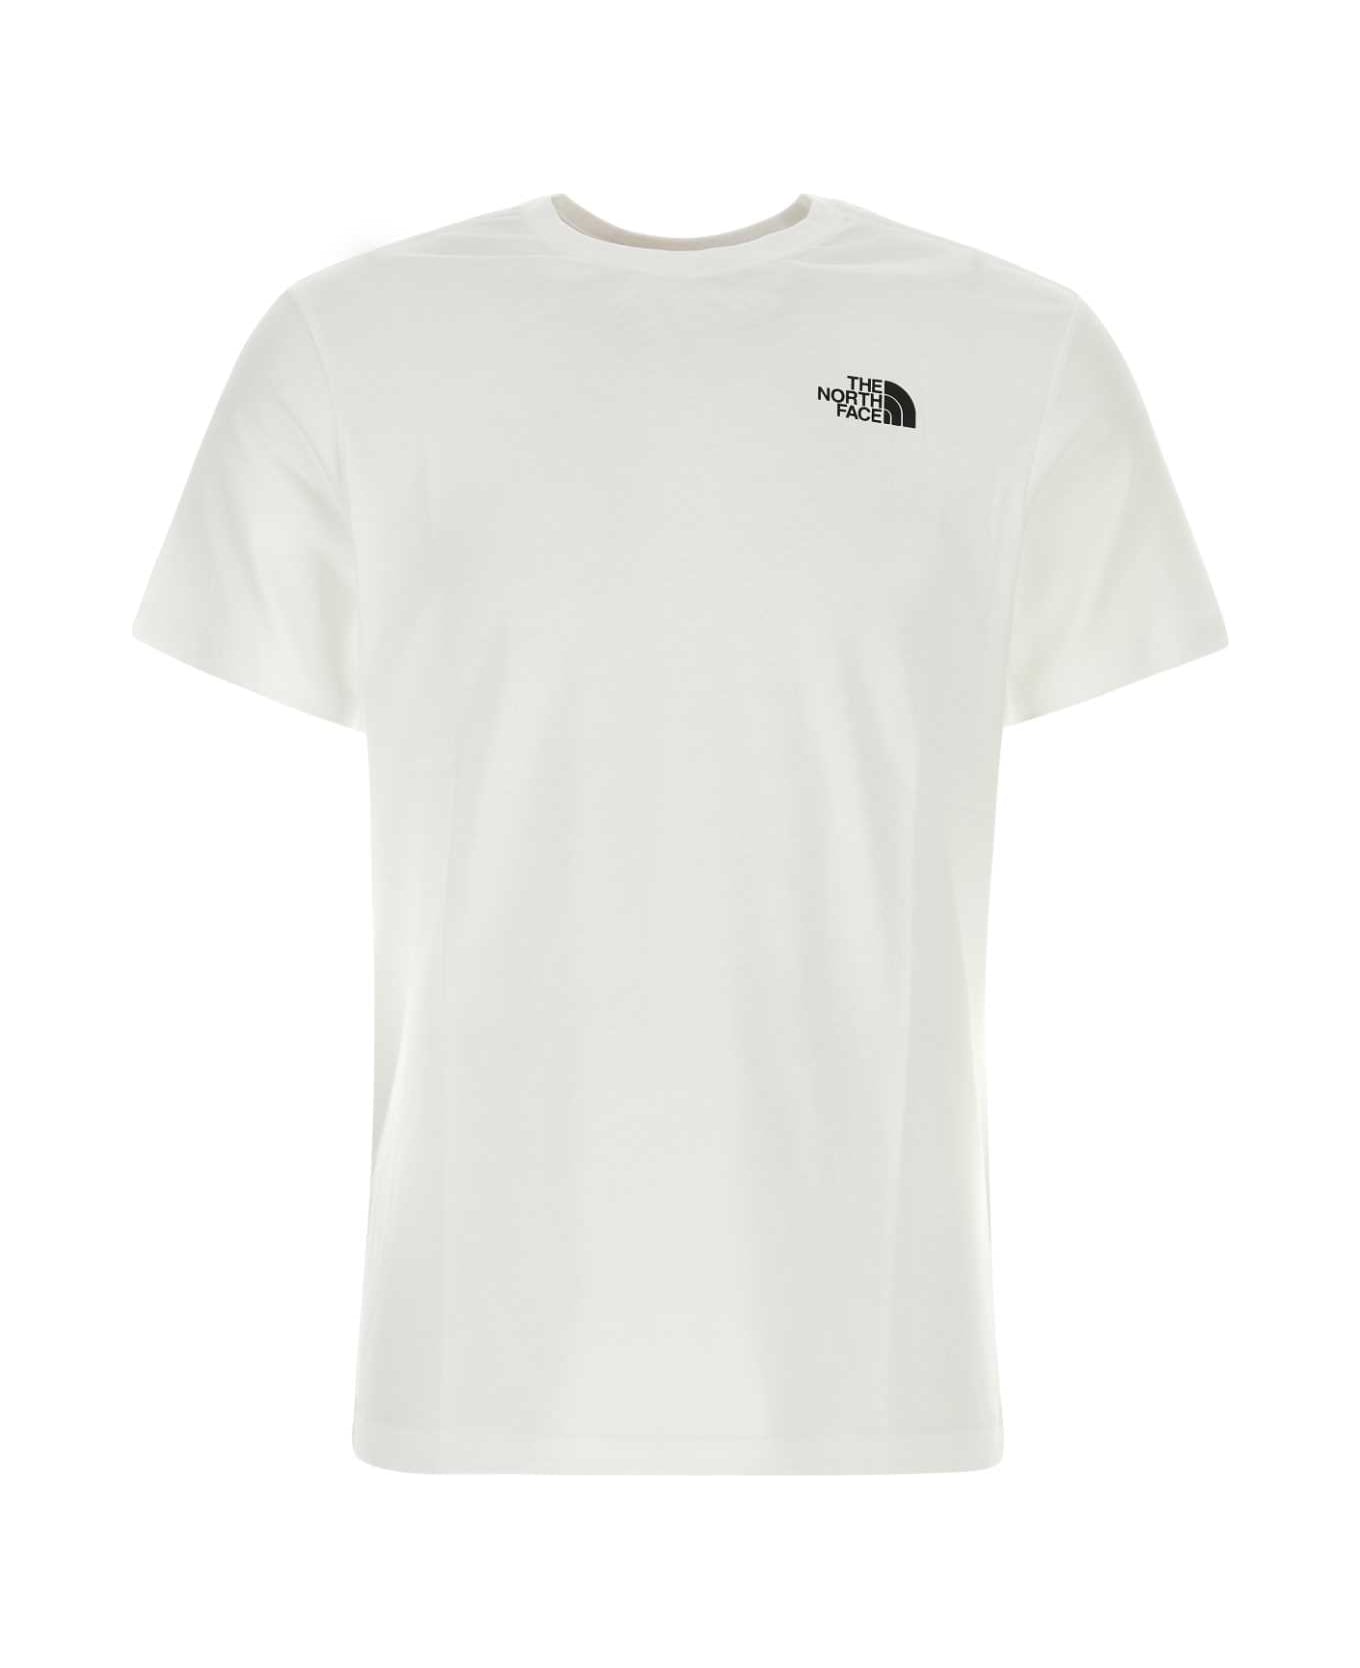 The North Face White Cotton T-shirt - WHT